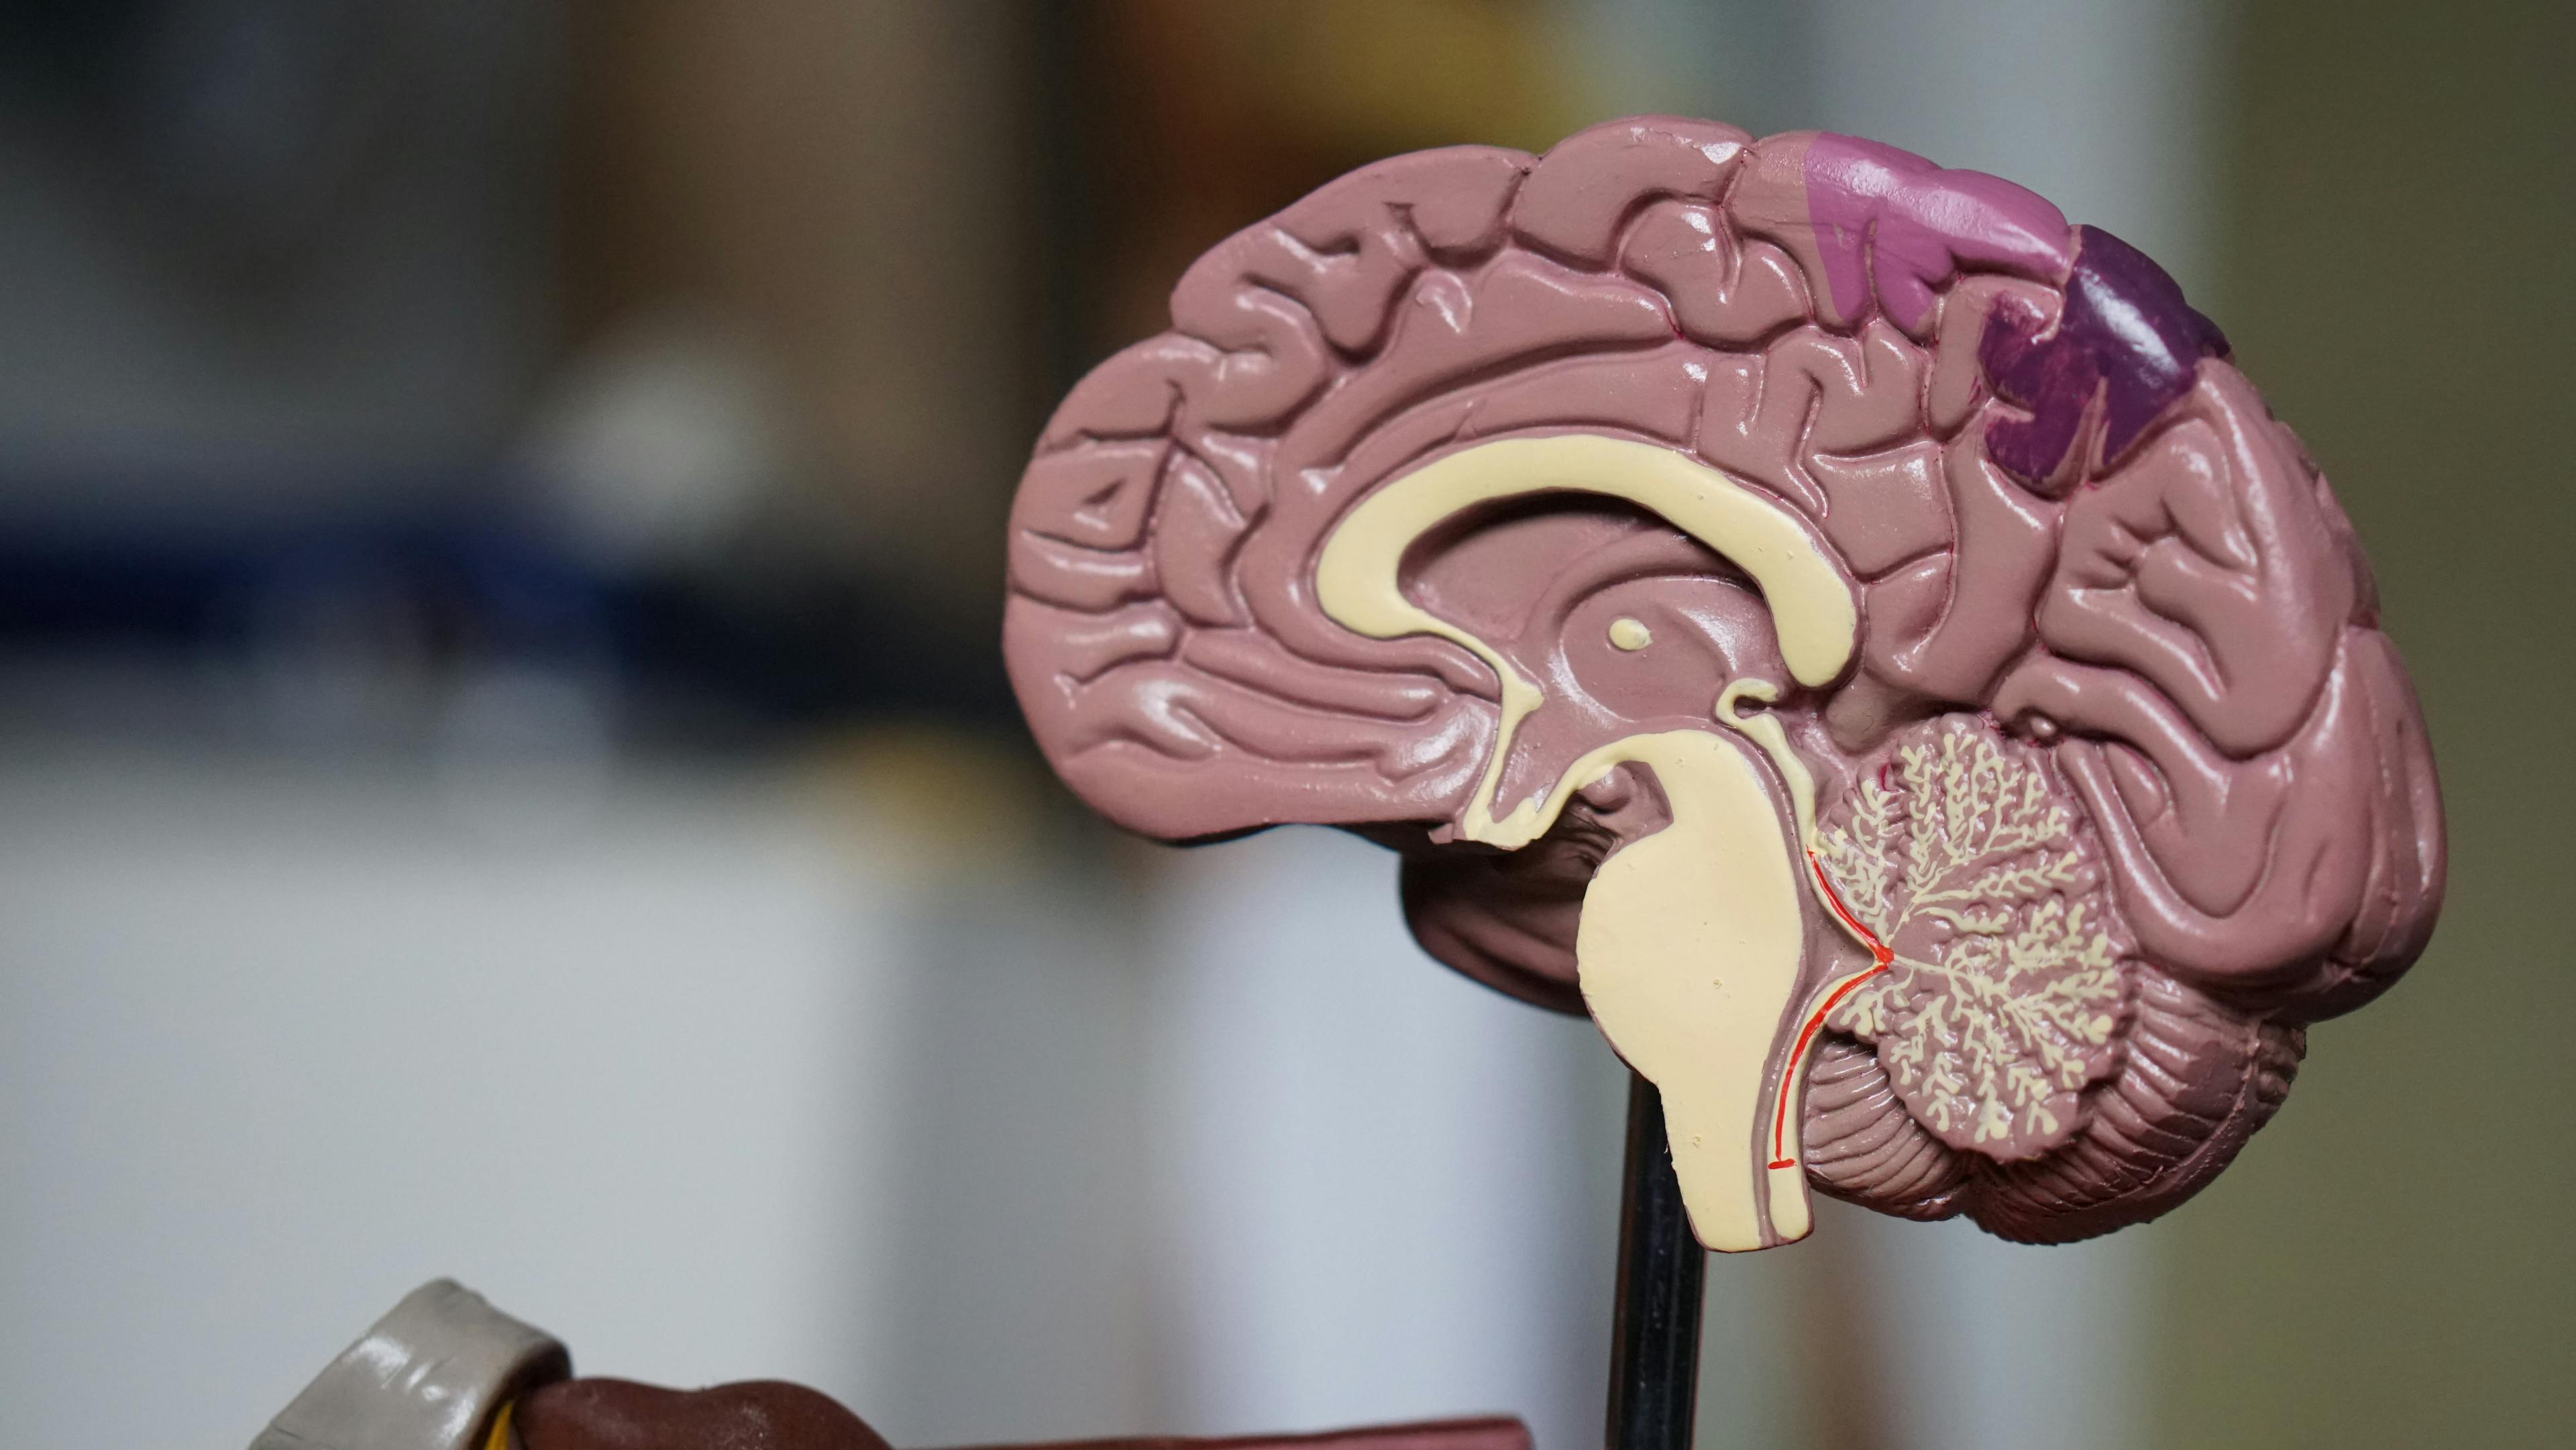 A plastic model of half a brain.